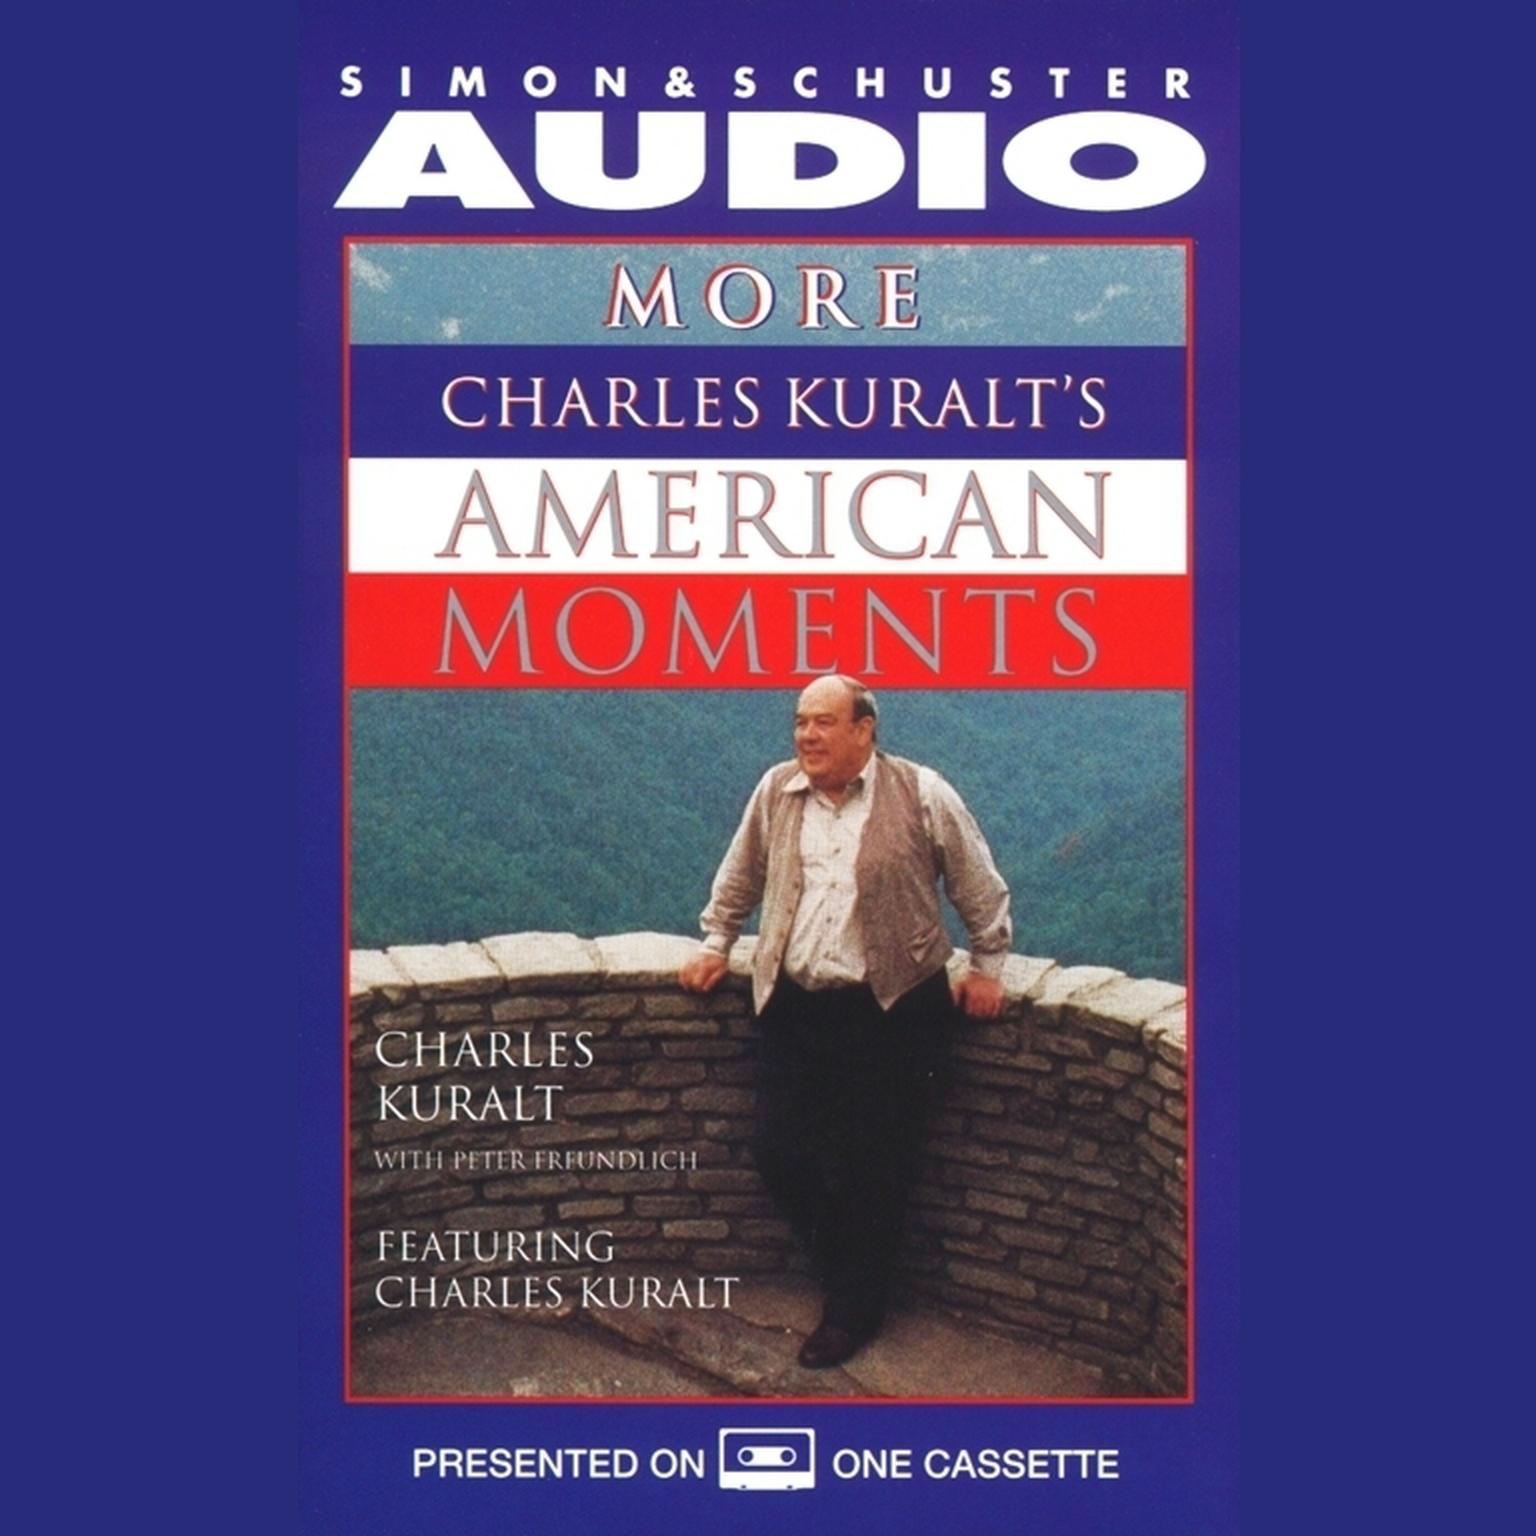 More Charles Kuralts American Moments (Abridged) Audiobook, by Charles Kuralt